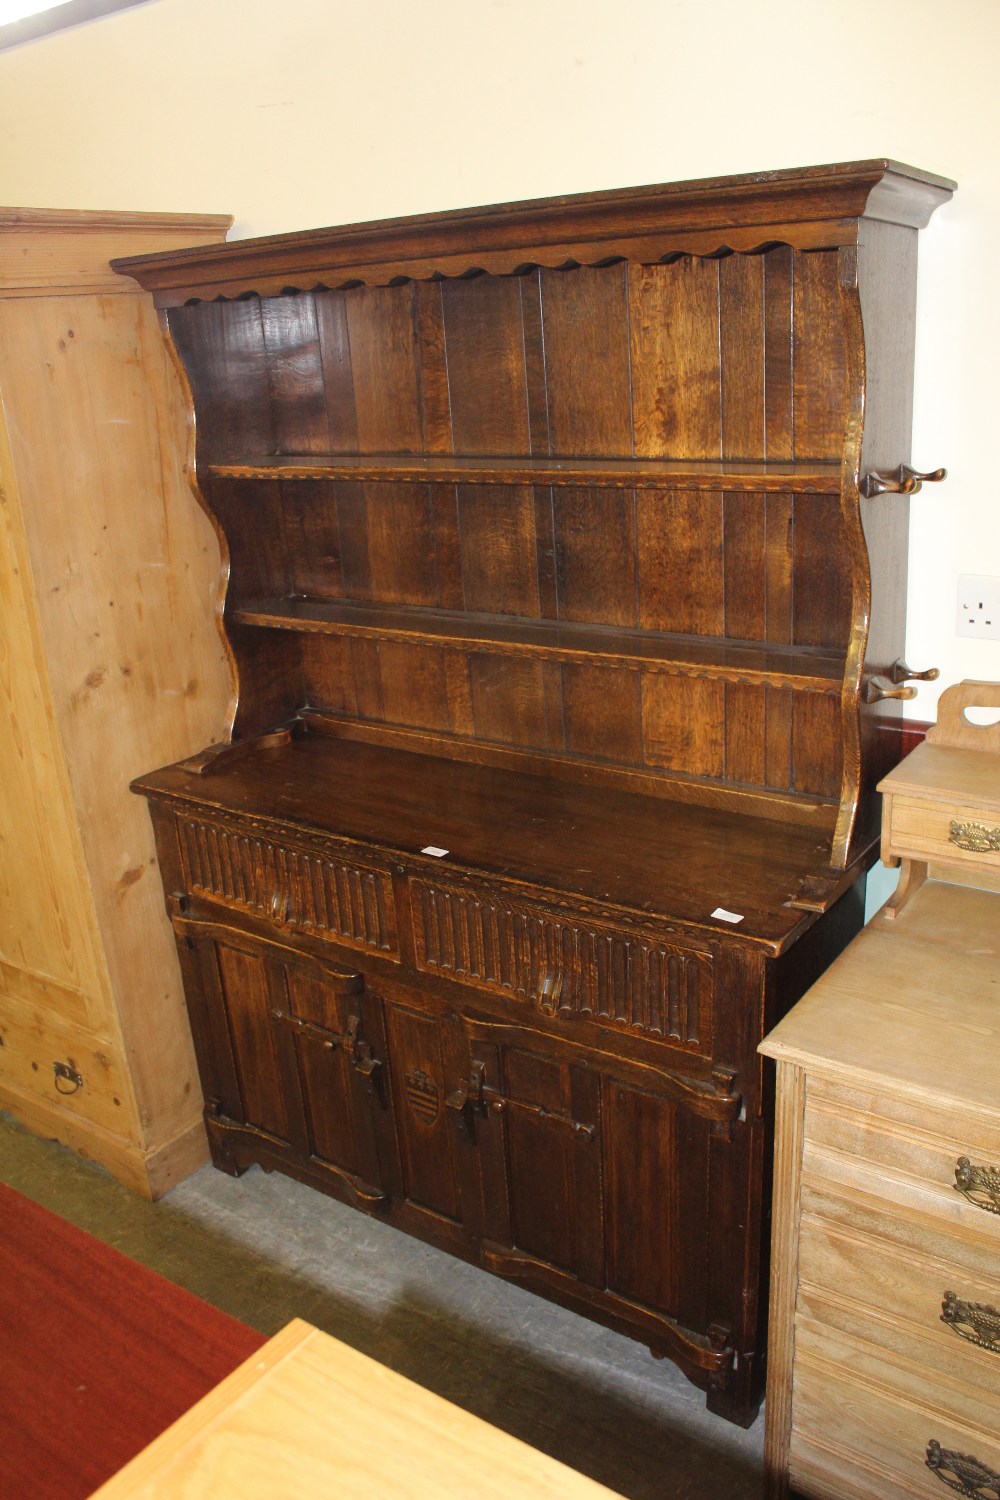 Oak dresser and rack